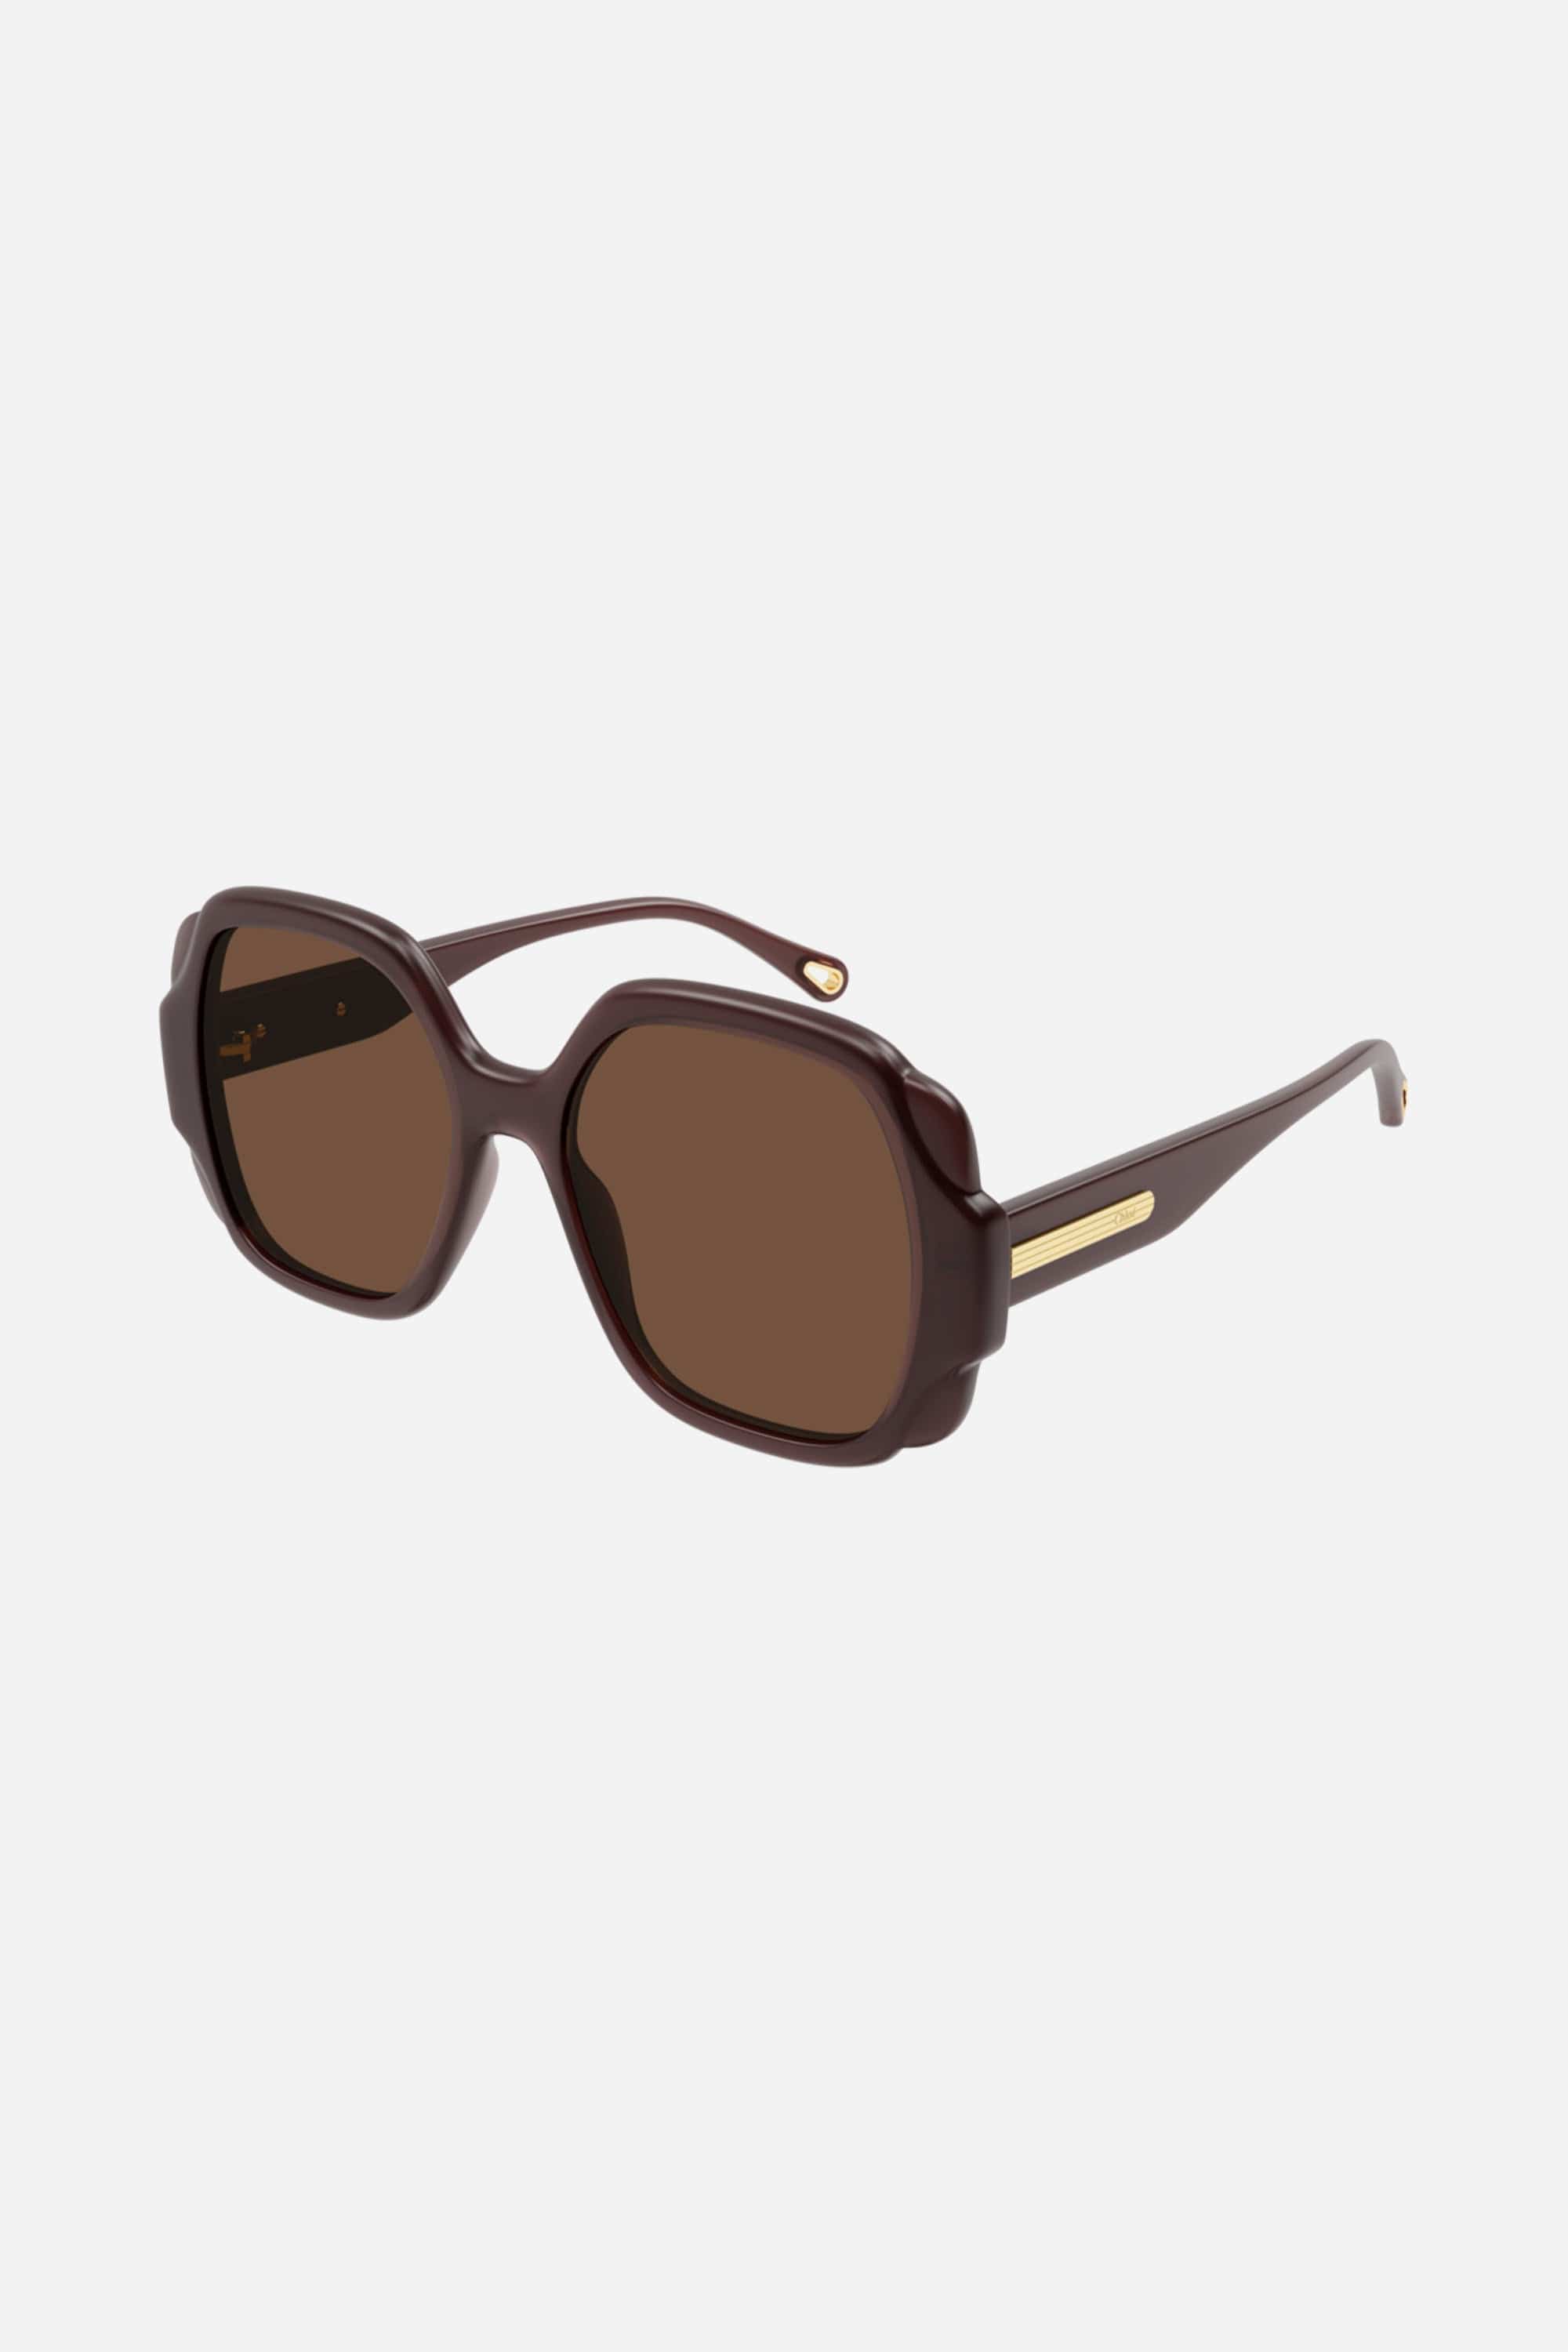 Chloe round dark brown sunglasses - Eyewear Club